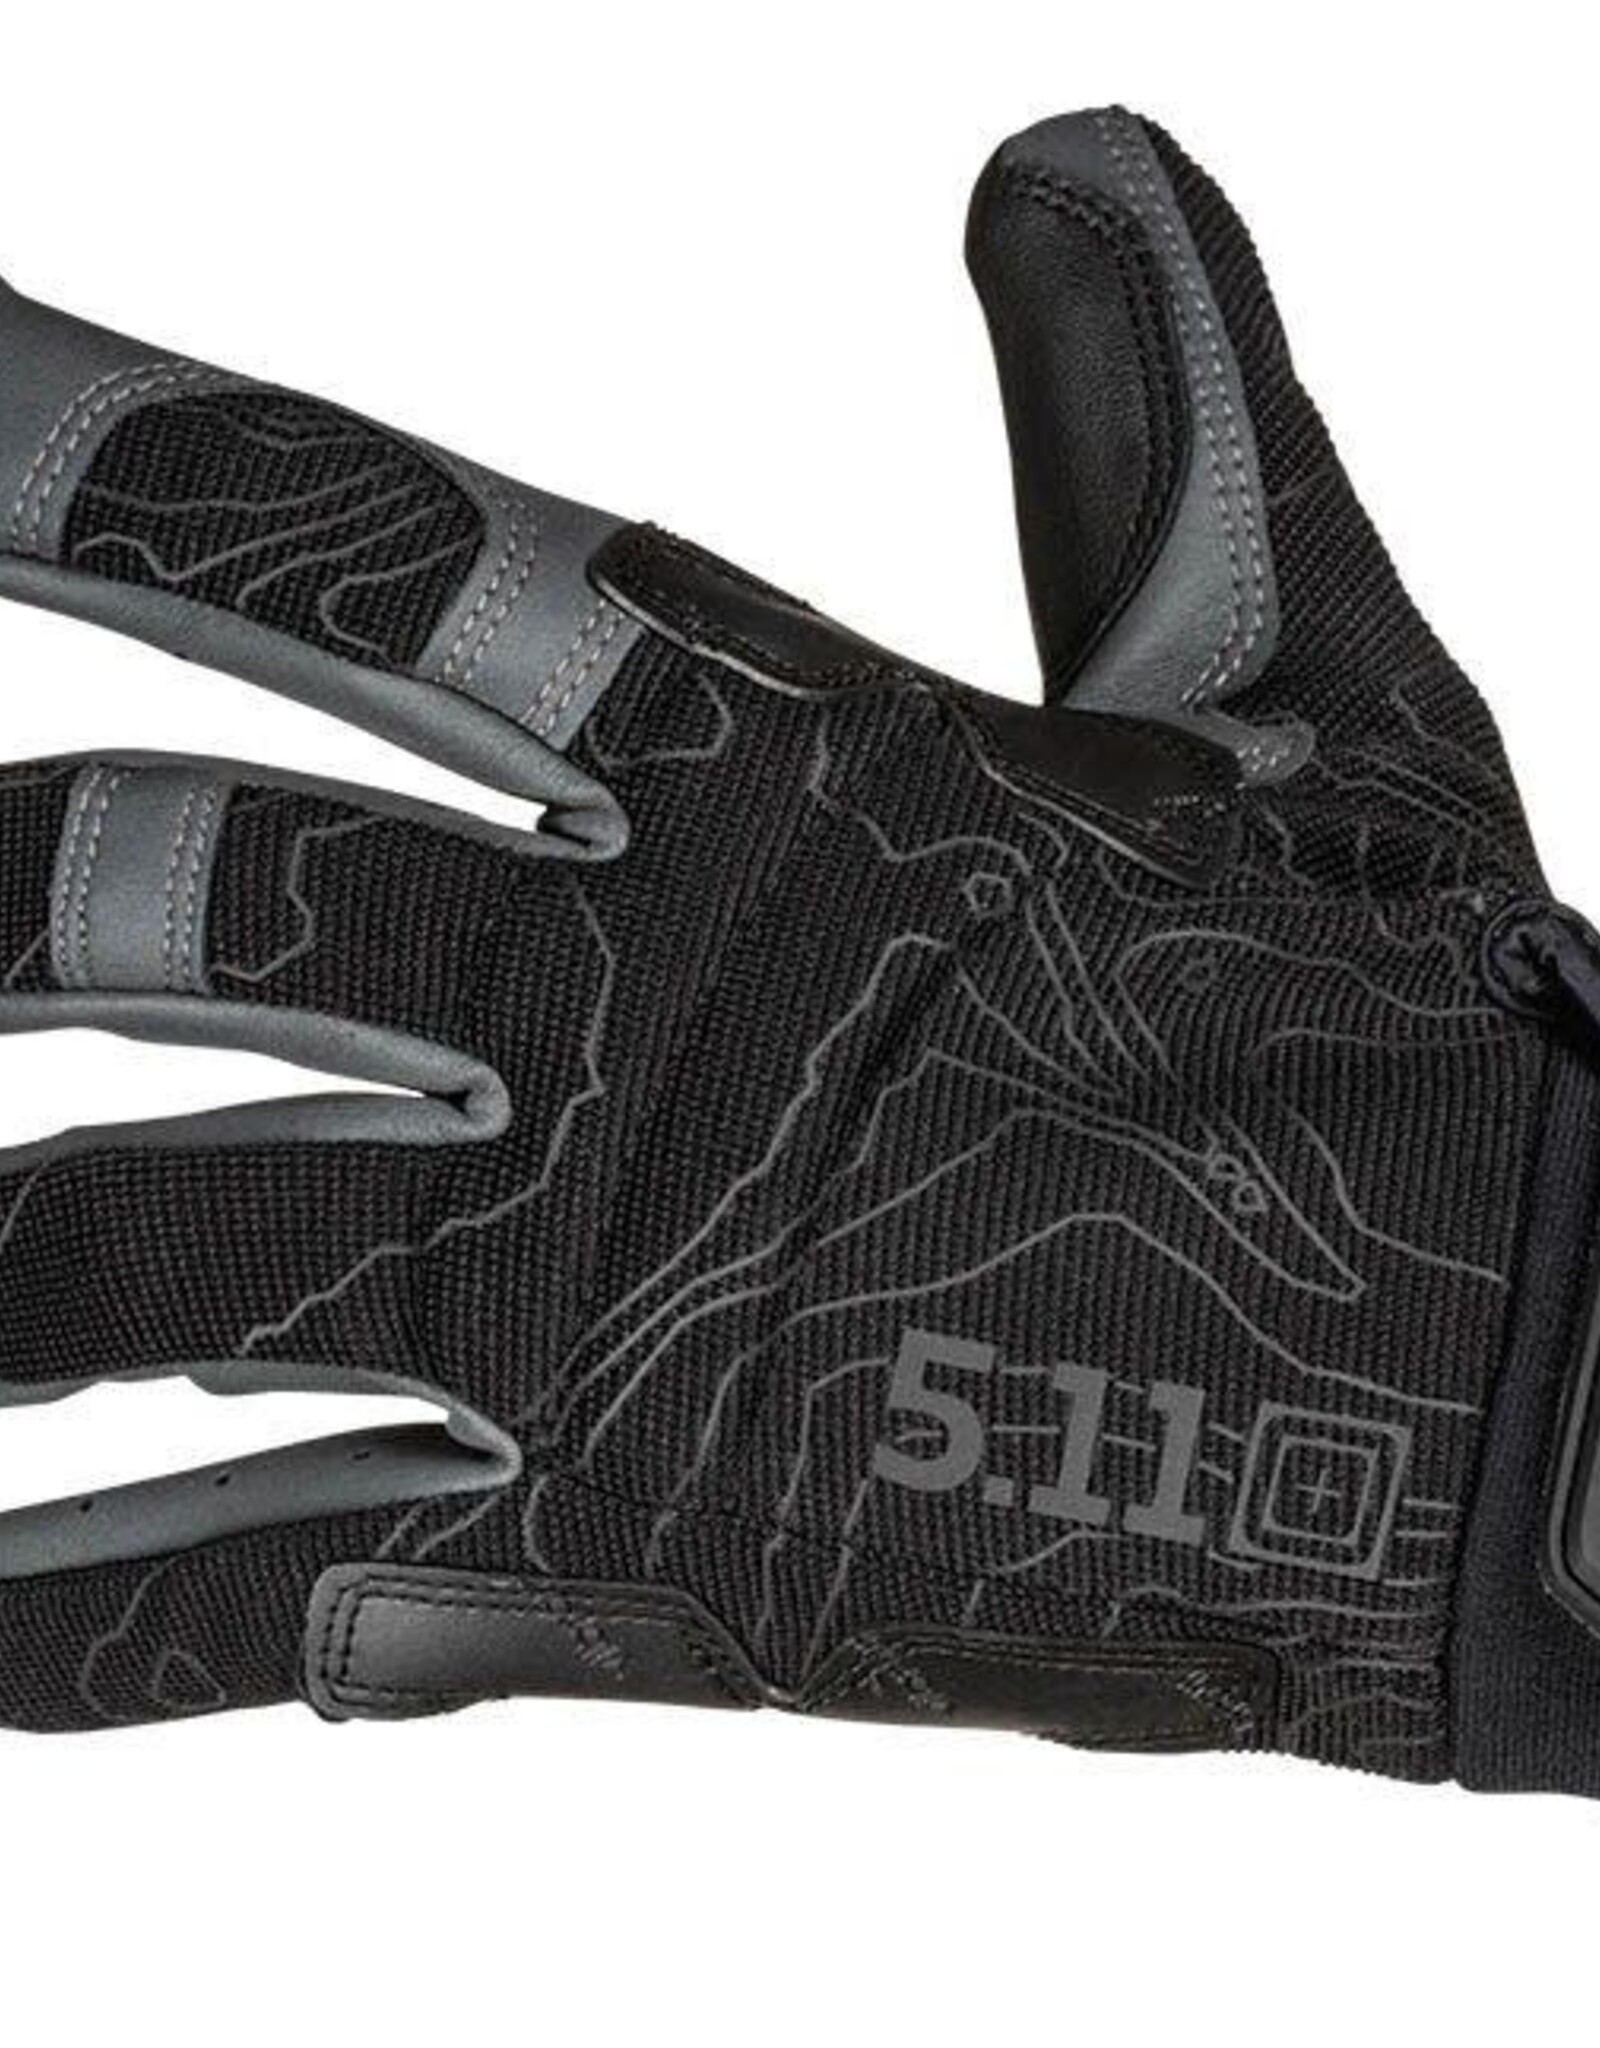 5.11 Tactical K9 Rope Gloves